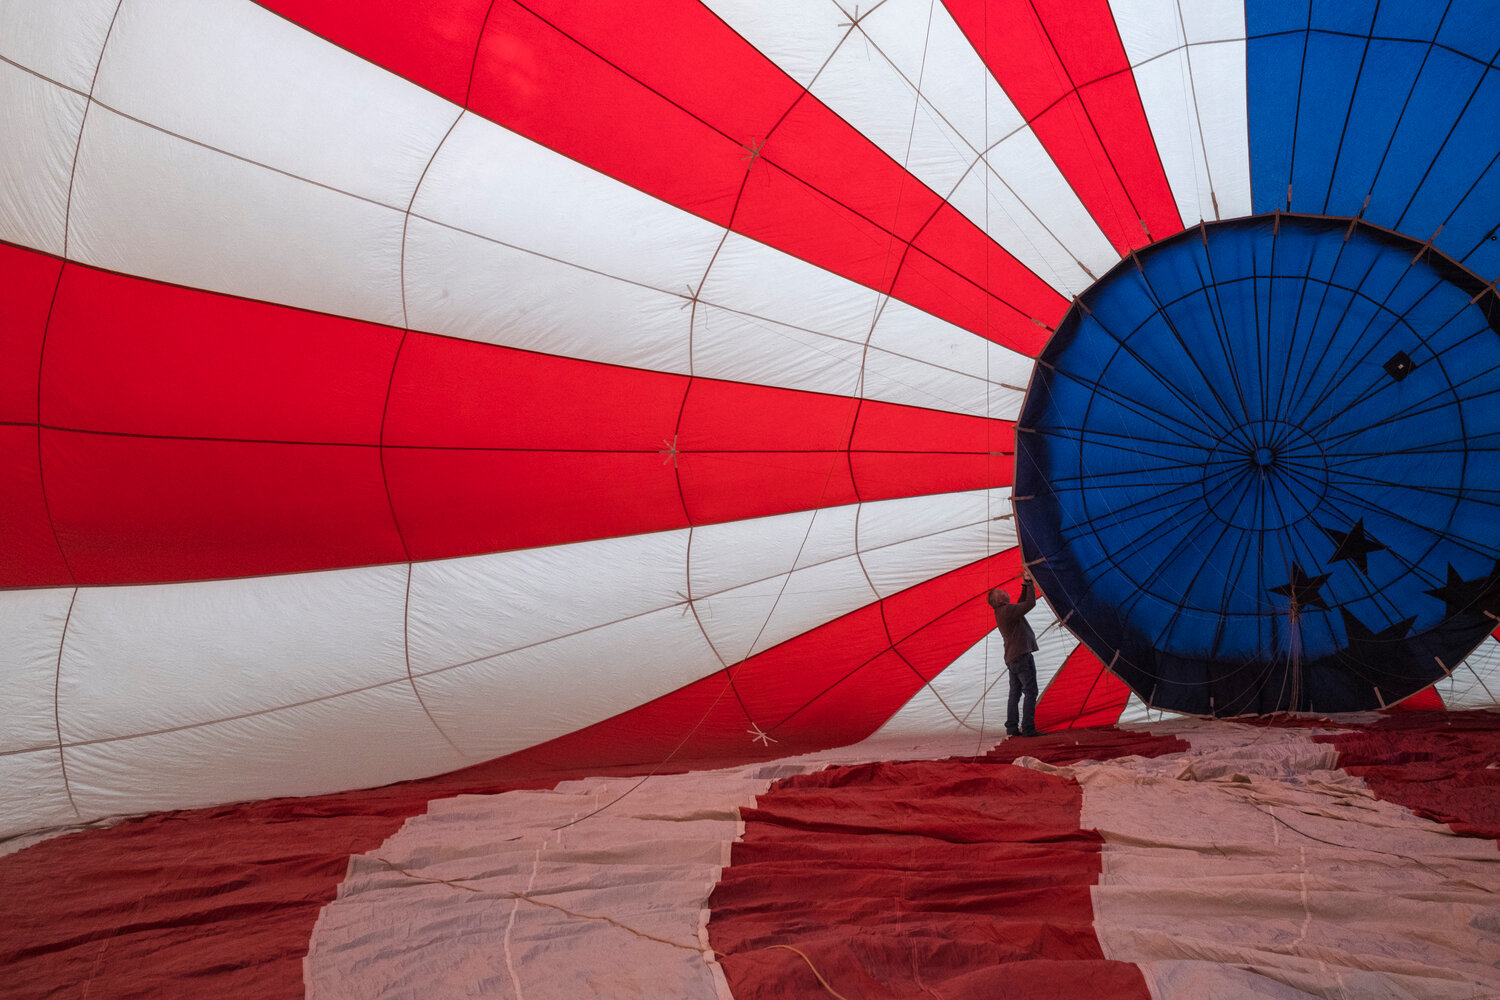 Gary Brossett, a hot air ballon pilot and crew member, checks the interior of “Stars & Stripes”, Rusty Miller’s balloon, before a flight outside of Atmore.